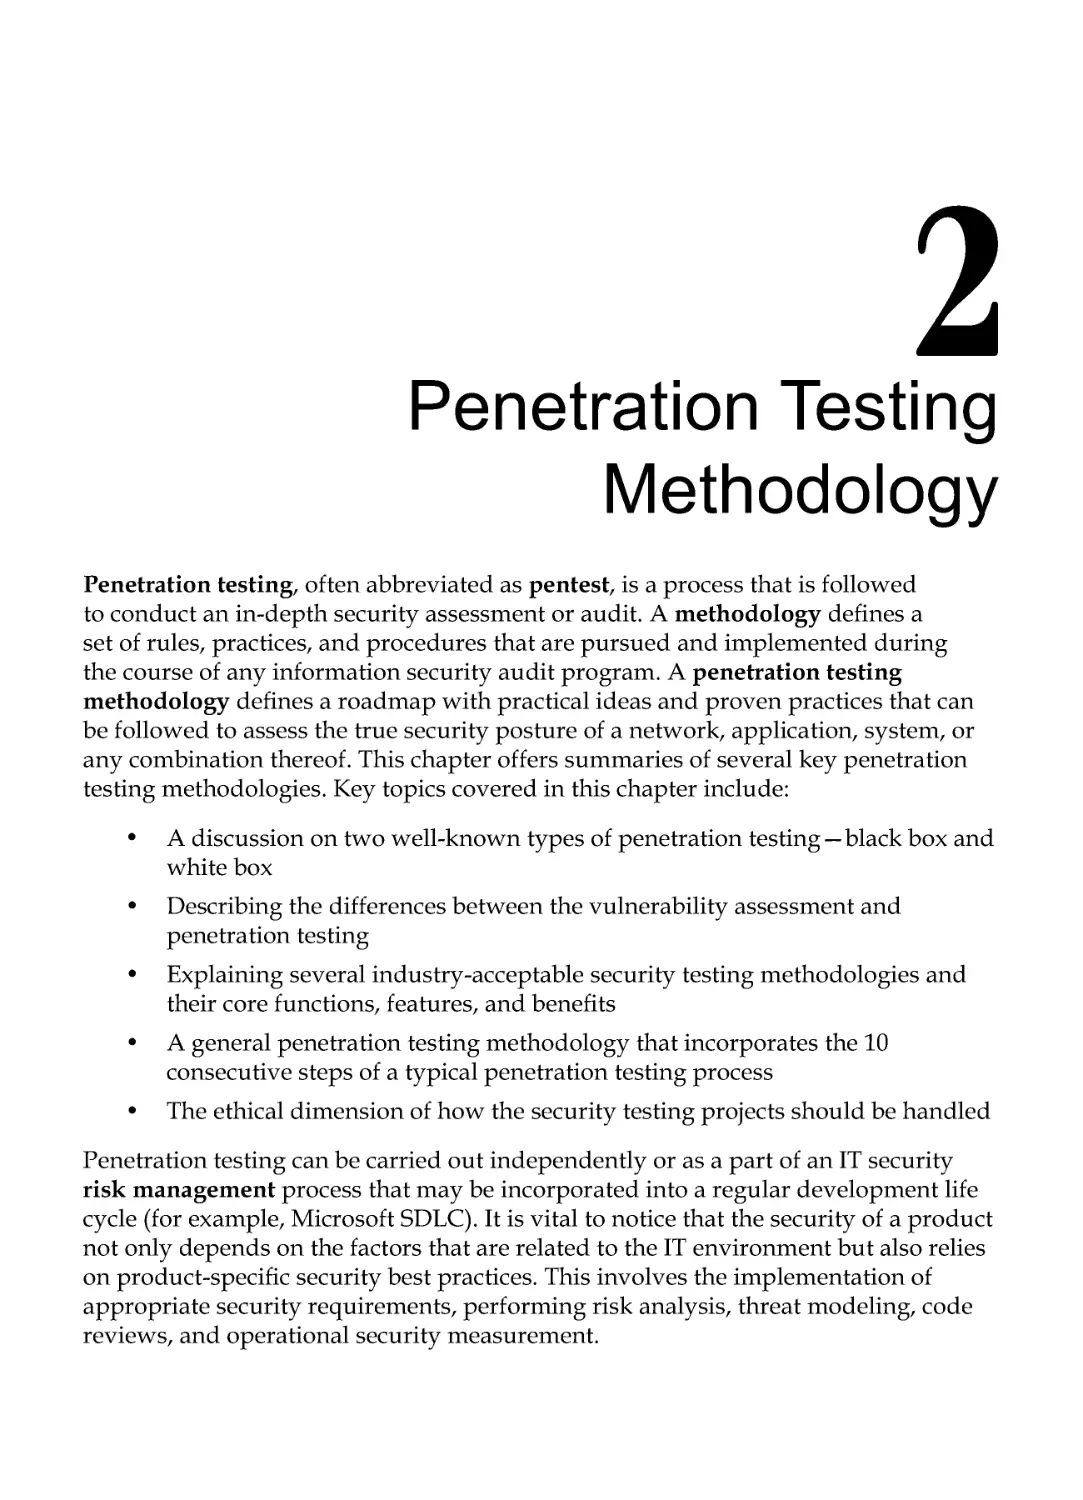 Chapter 2: Penetration Testing Methodology